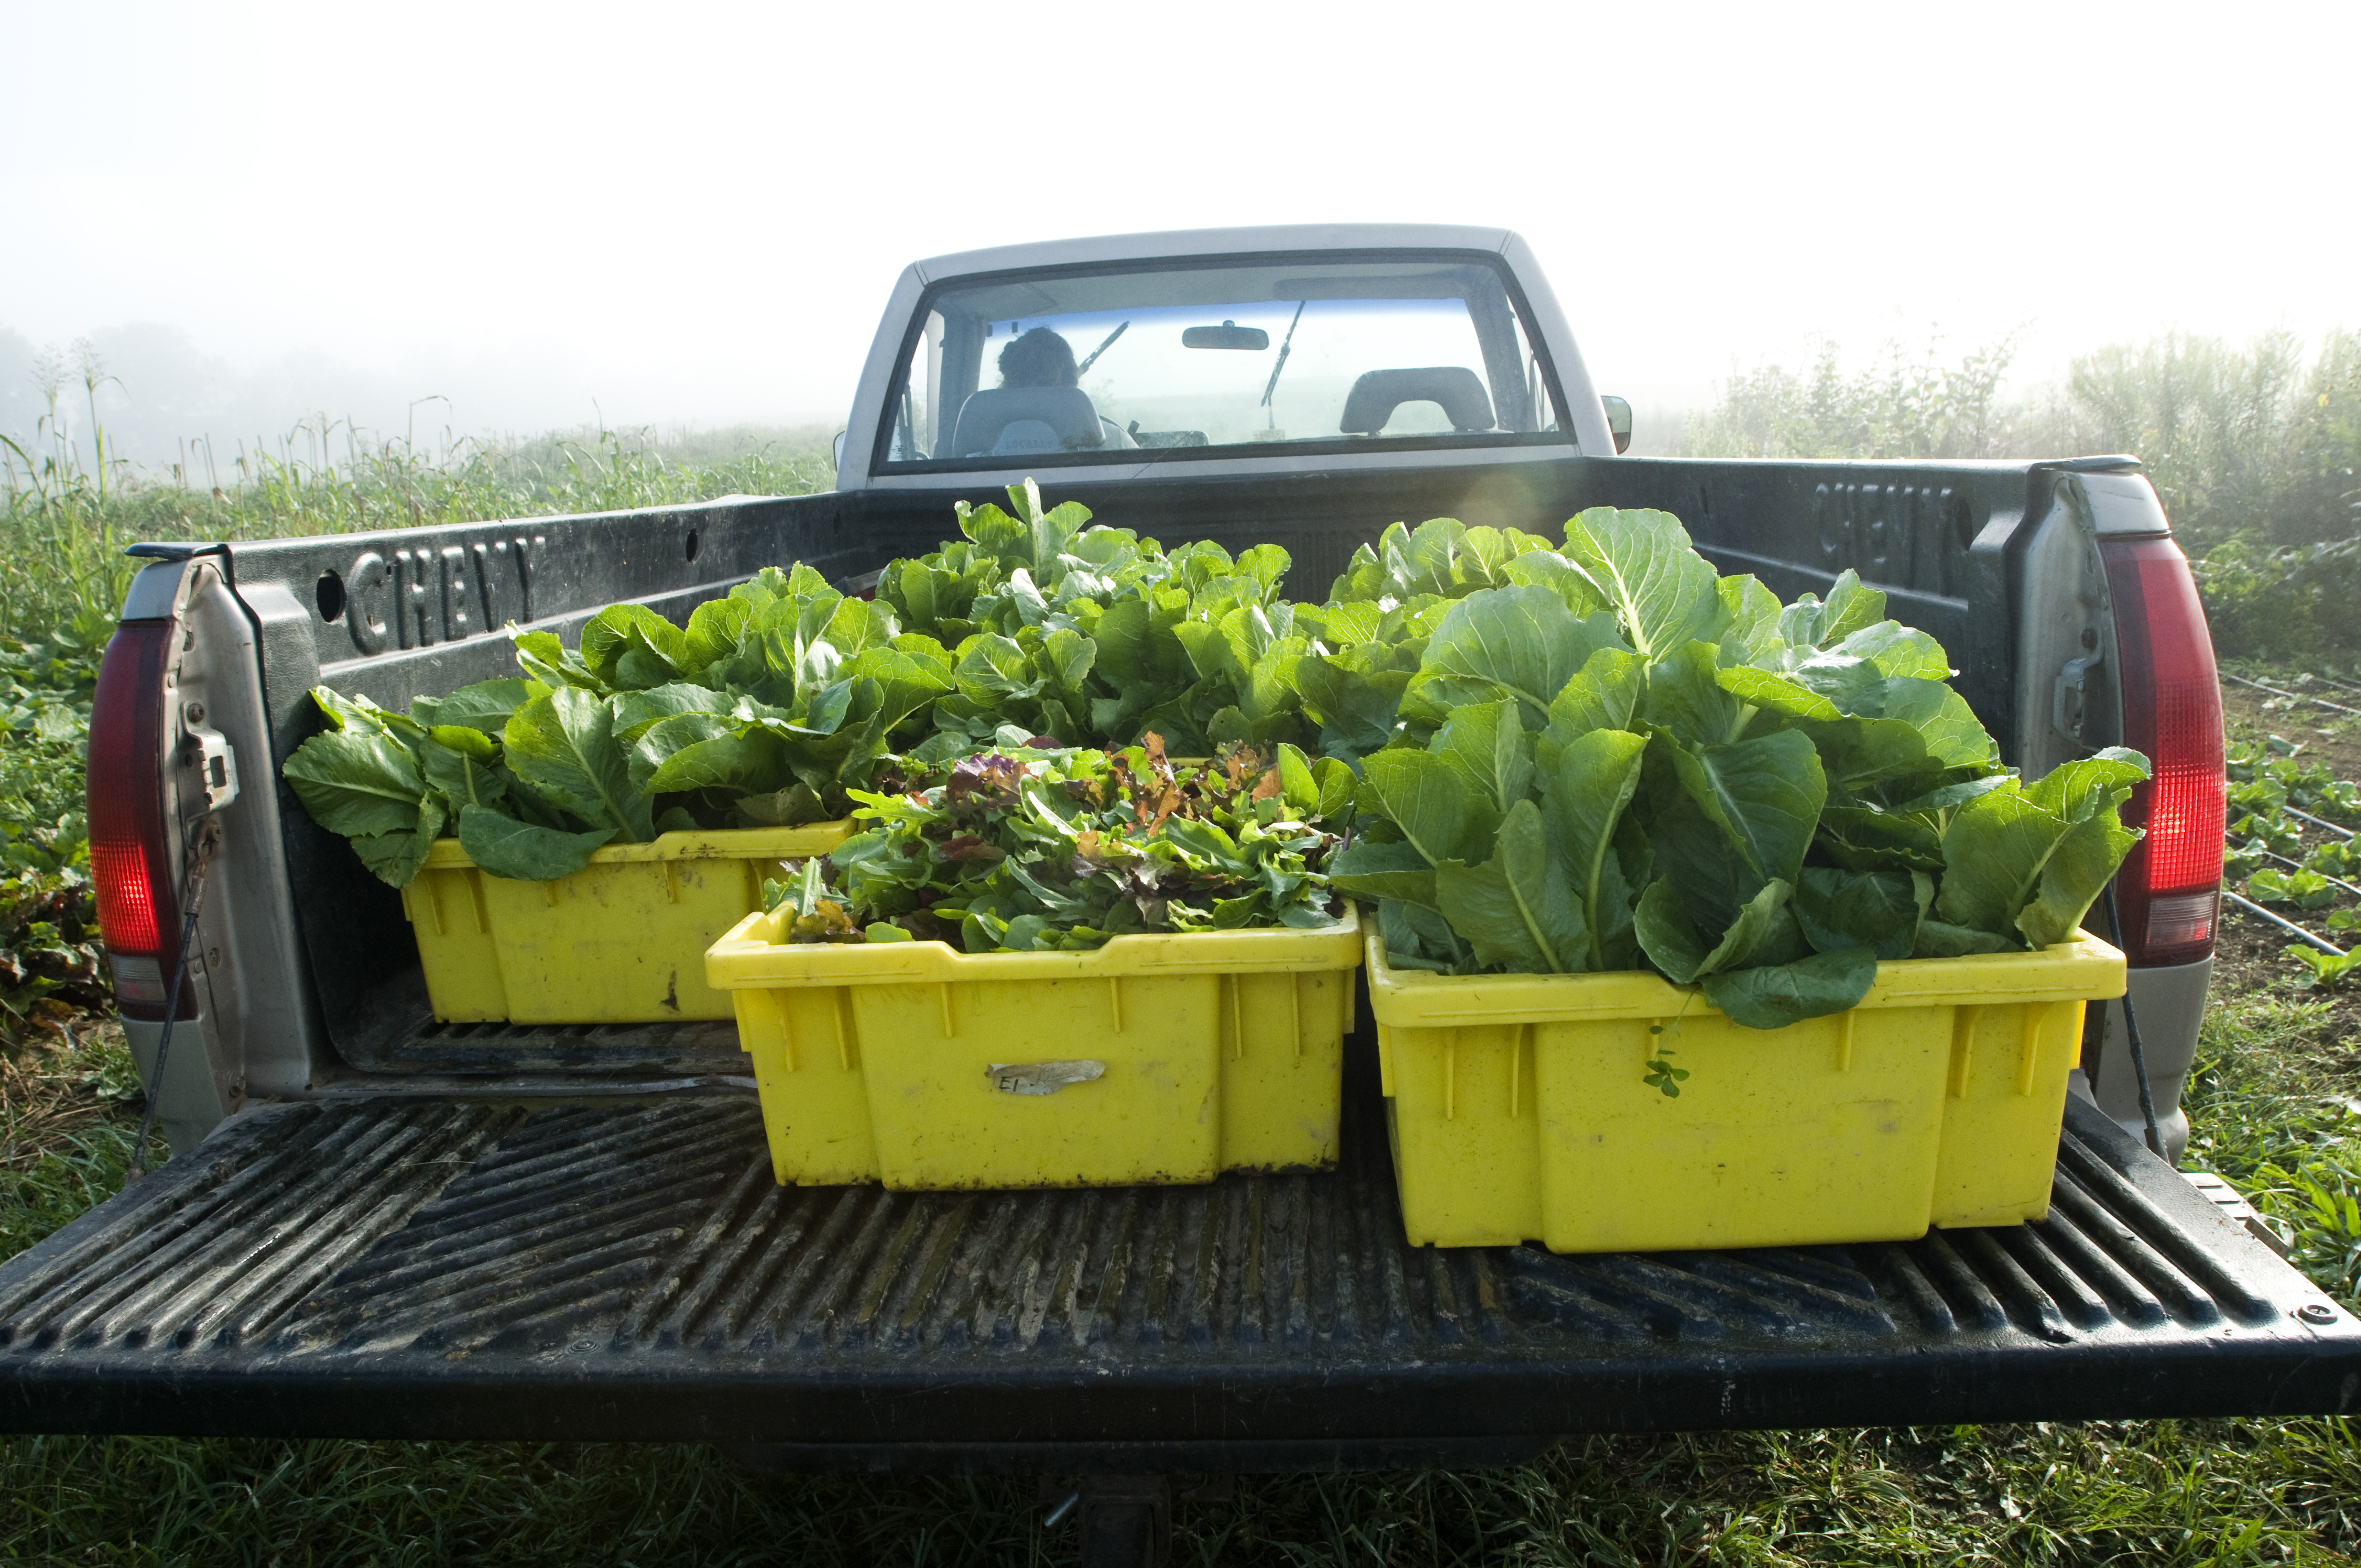 A truck carries Kentland Farm produce.